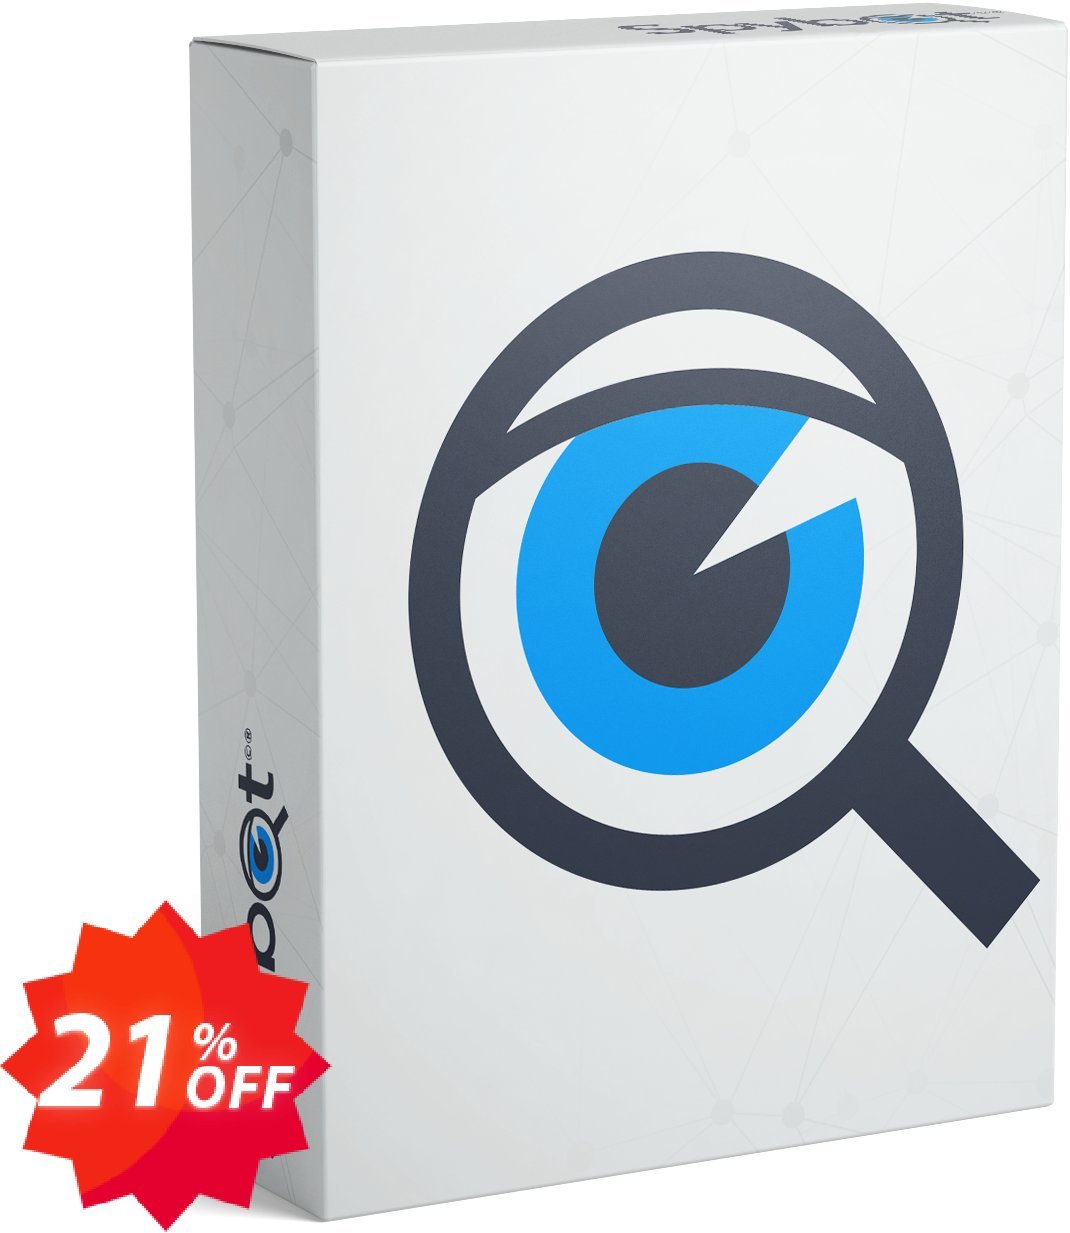 Spybot Home Edition Coupon code 21% discount 